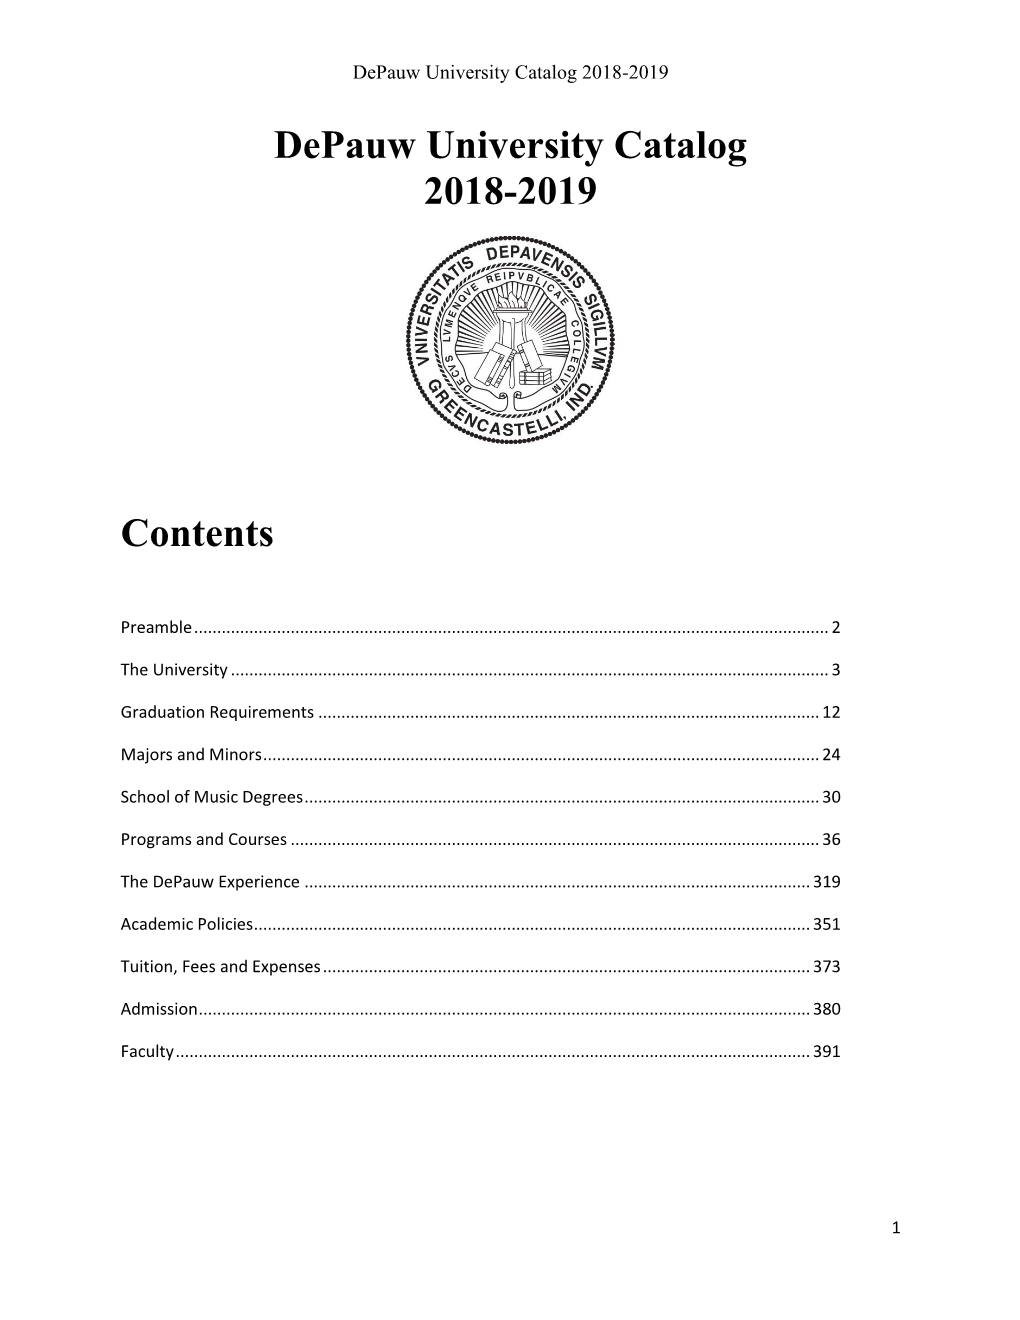 Depauw University Catalog 2018-2019 Contents